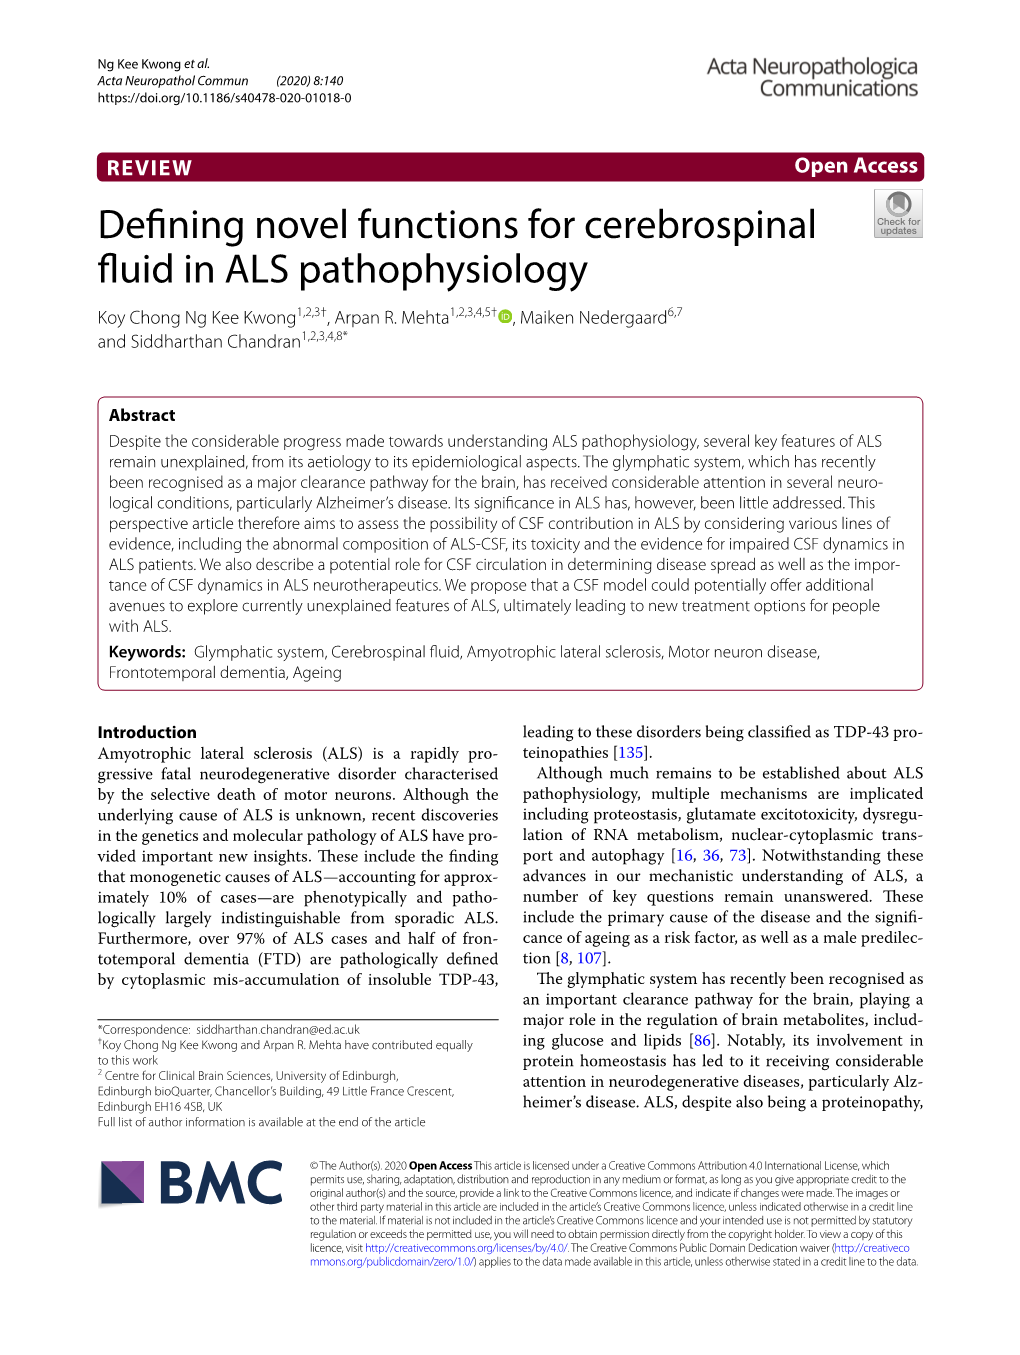 Defining Novel Functions for Cerebrospinal Fluid in ALS